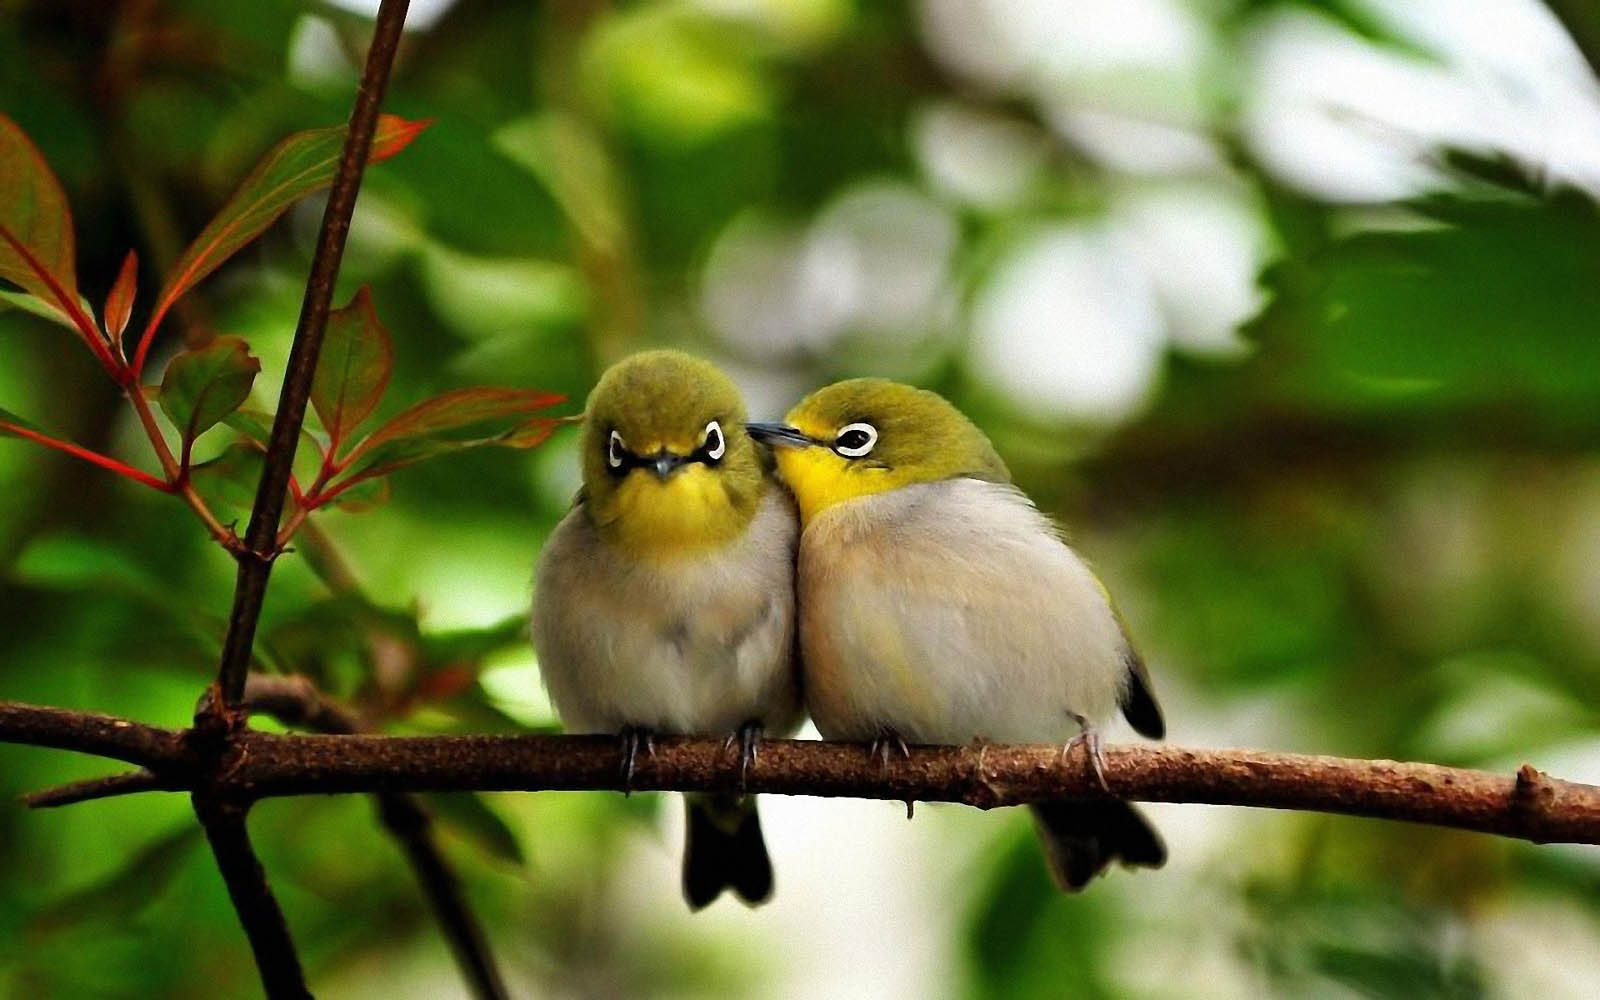 https://blogger.googleusercontent.com/img/b/R29vZ2xl/AVvXsEgHFauK8wUJzcw3G4xnthMIQYdJrAFFCoWD1Ebl2oenNQZDYGhNp38A3tsOogA9L8vvZftBs7ln1bWcSP0lZAtrOkMLuLFBanOwhA_0t2KVSJ2sJfzsK-jEvE_motNNG91NbaxOalG6URJM/s1600/Love+Birds+Desktop+Wallpapers+2.jpg